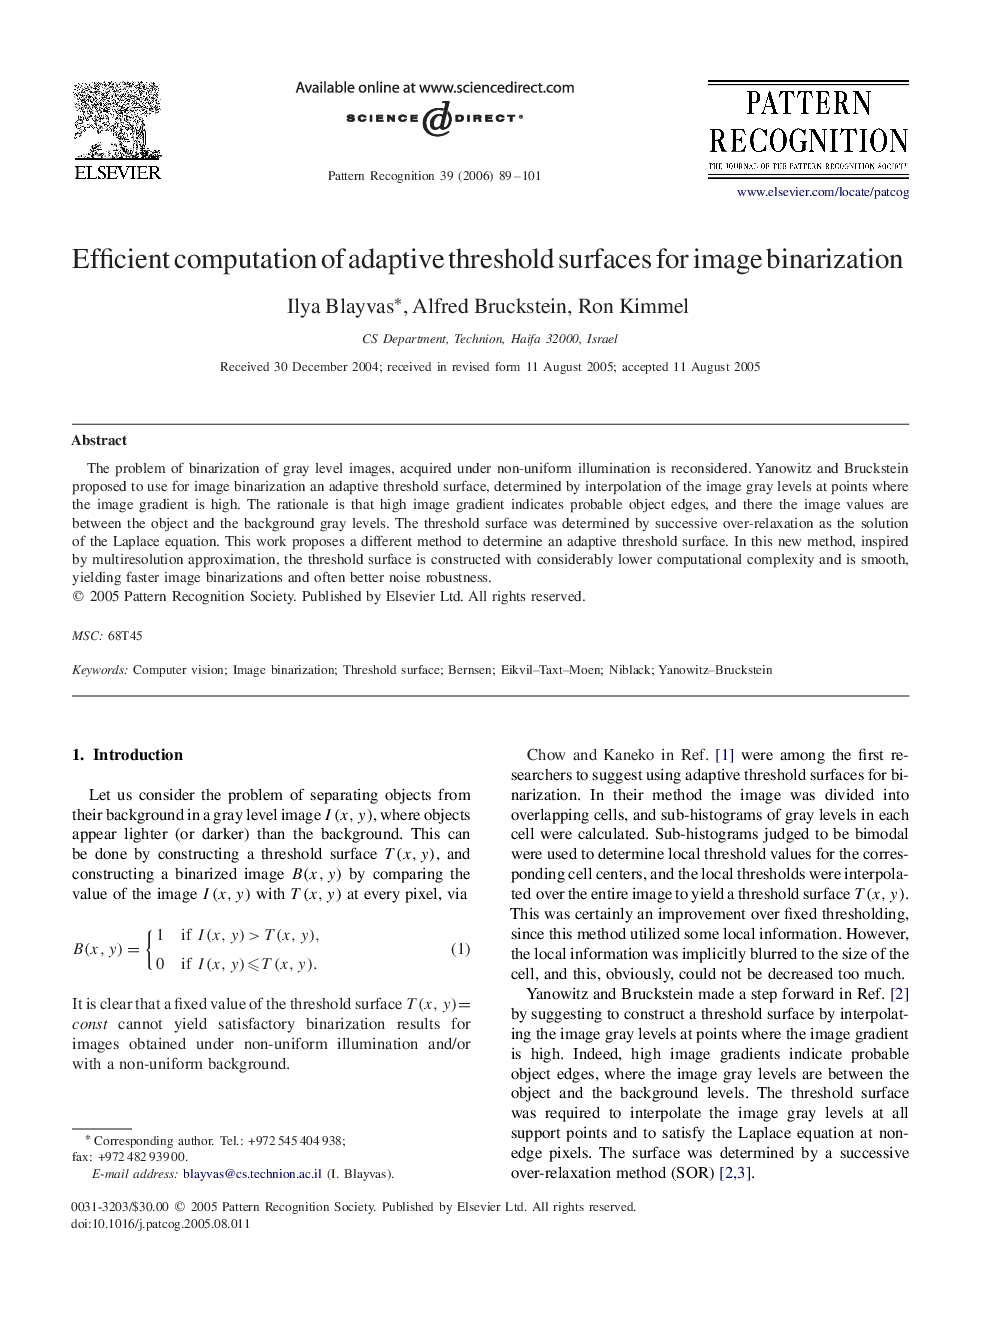 Efficient computation of adaptive threshold surfaces for image binarization